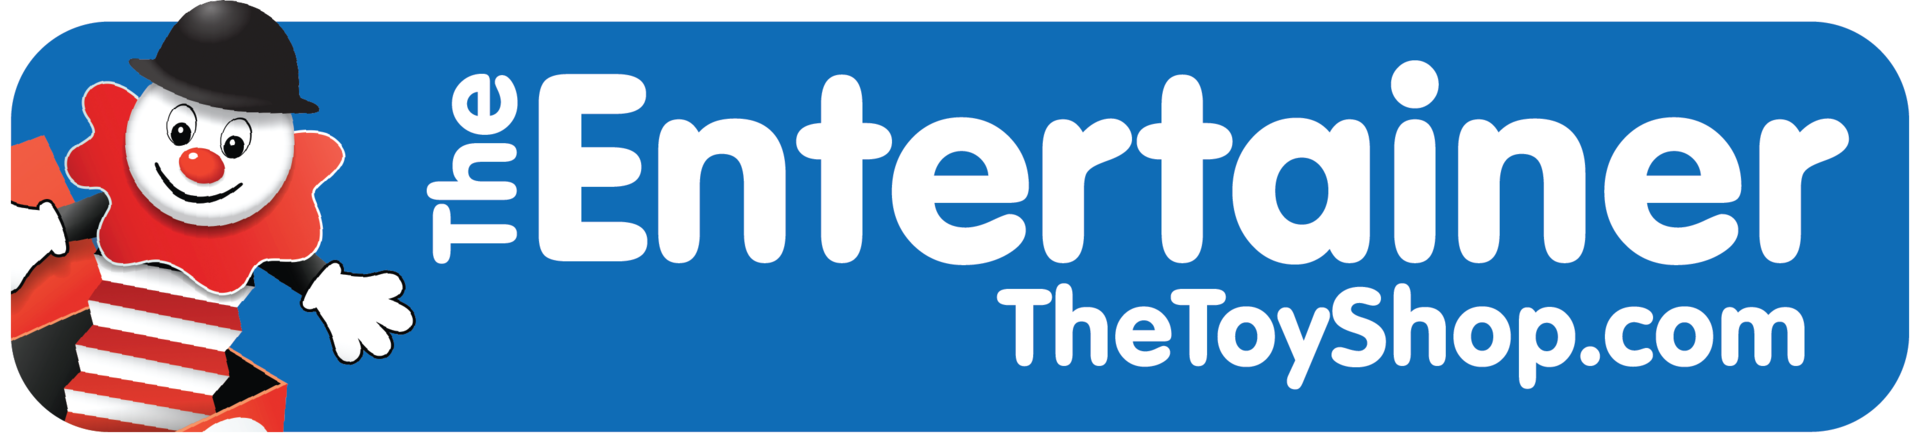 Entertainer logo